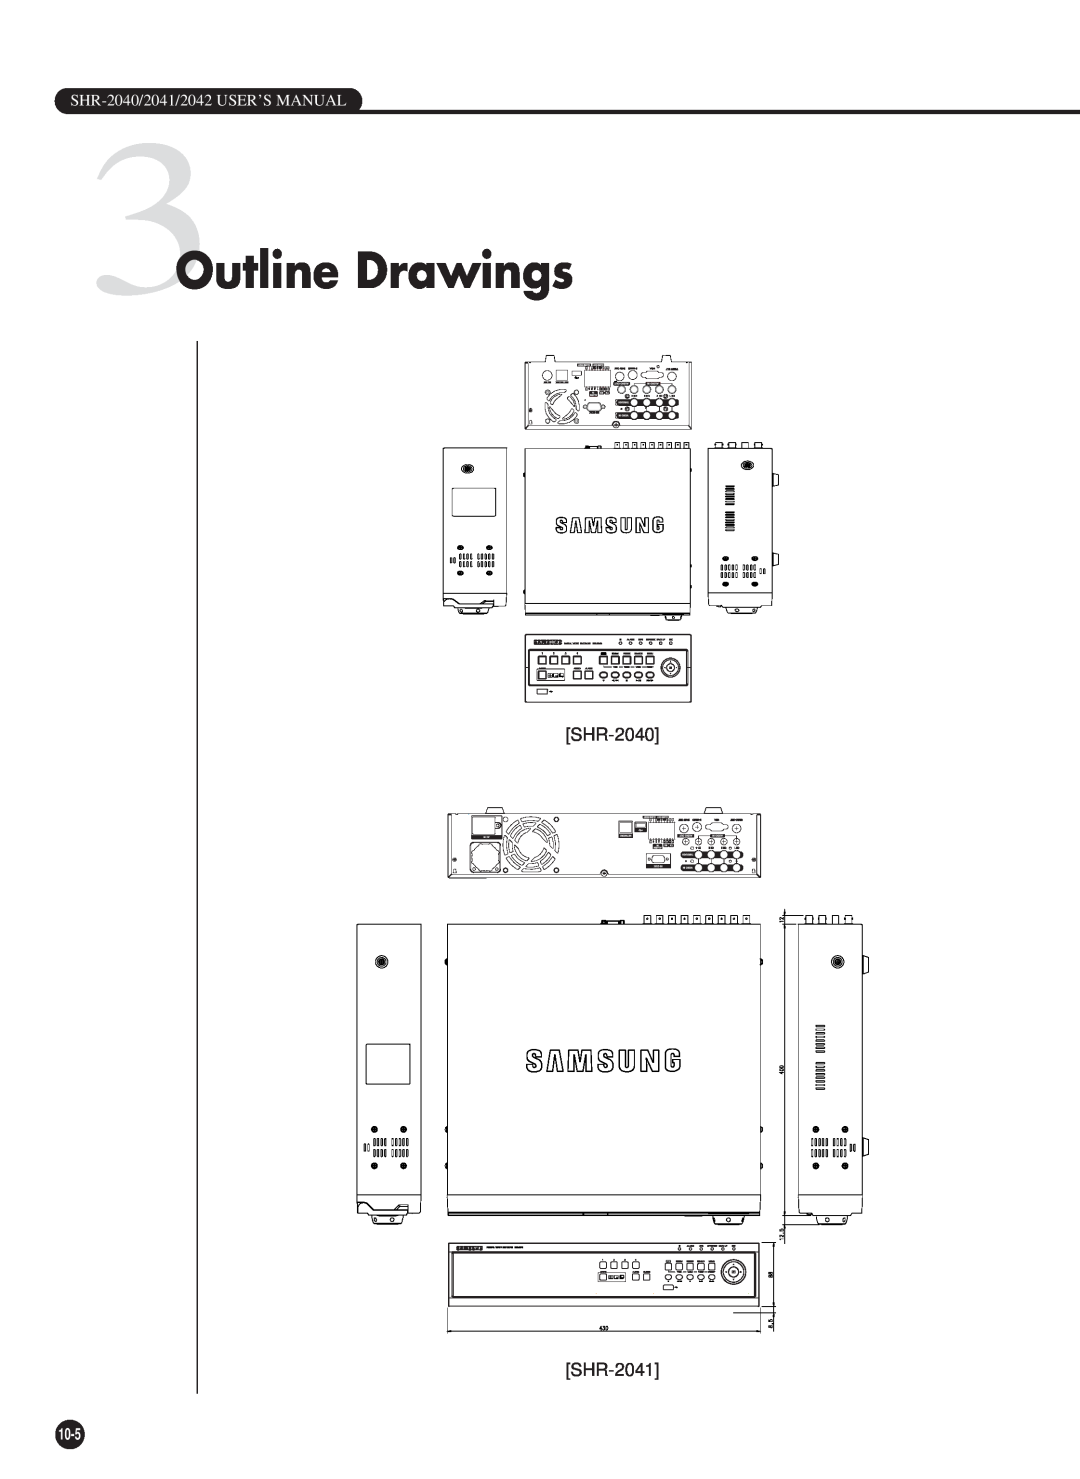 Samsung SHR-2040P/XEC, SHR-2040P/GAR manual 3Outline Drawings, SHR-2040 SHR-2041, SHR-2040/2041/2042 USER’S MANUAL, 10-5 